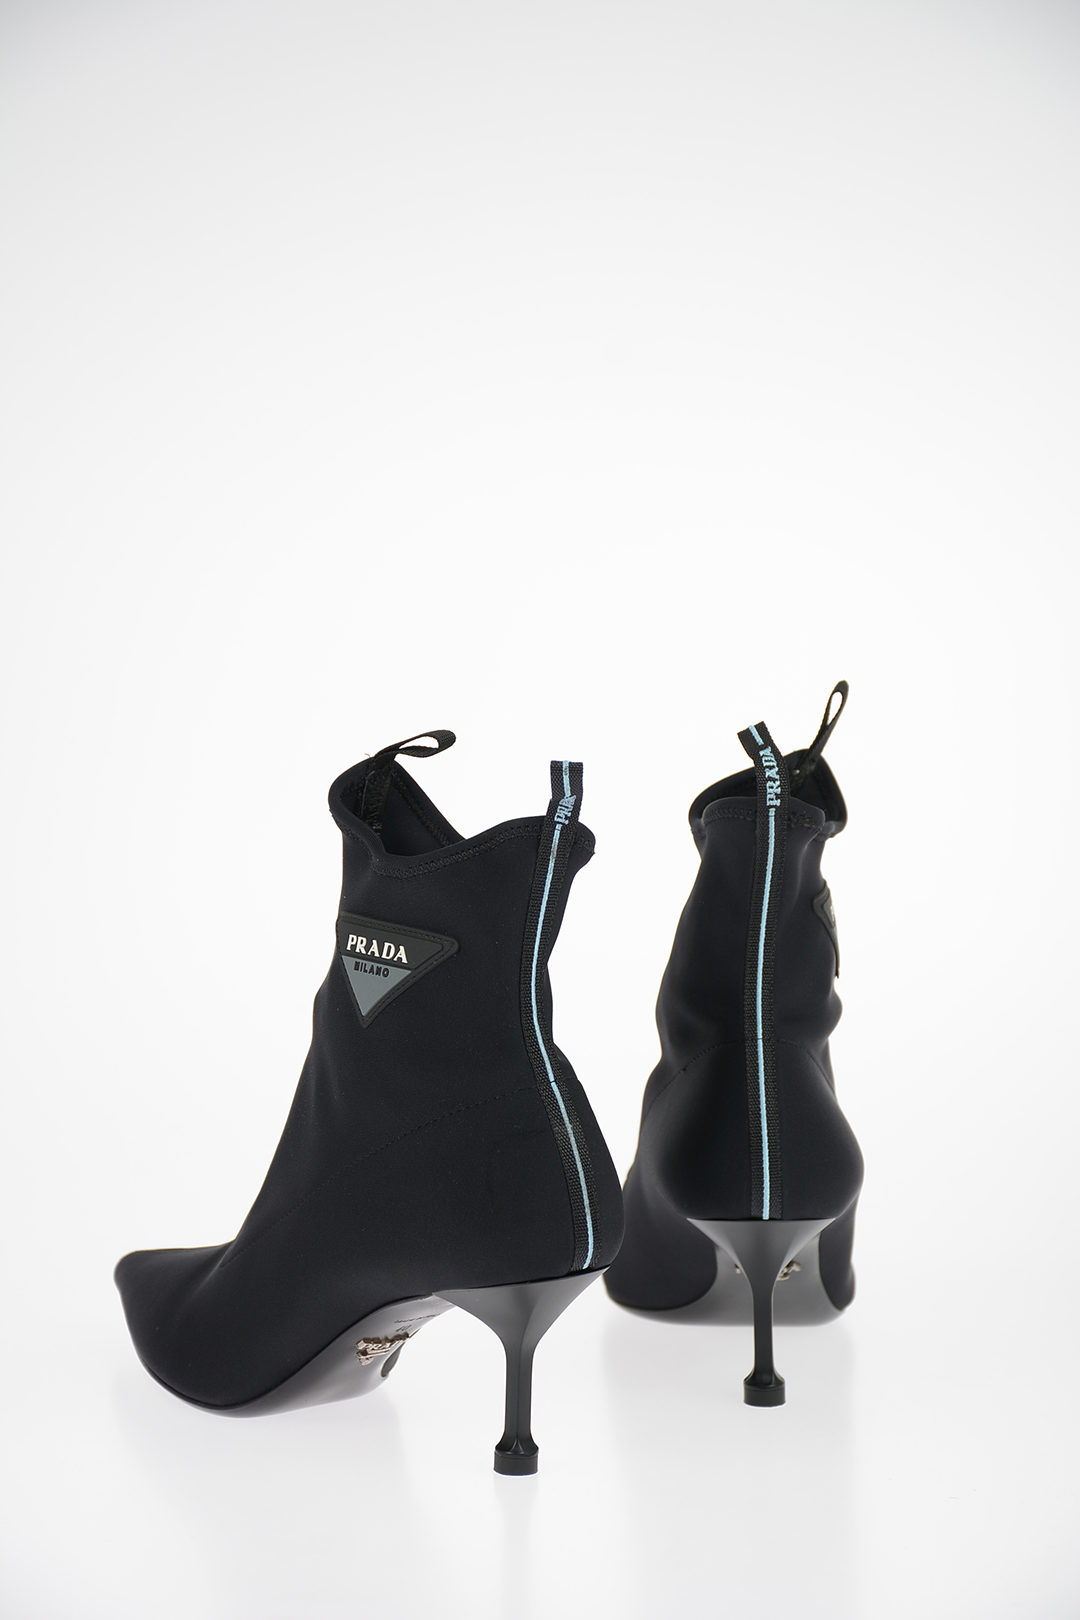 Prada 7cm Neoprene Ankle Boots women - Glamood Outlet